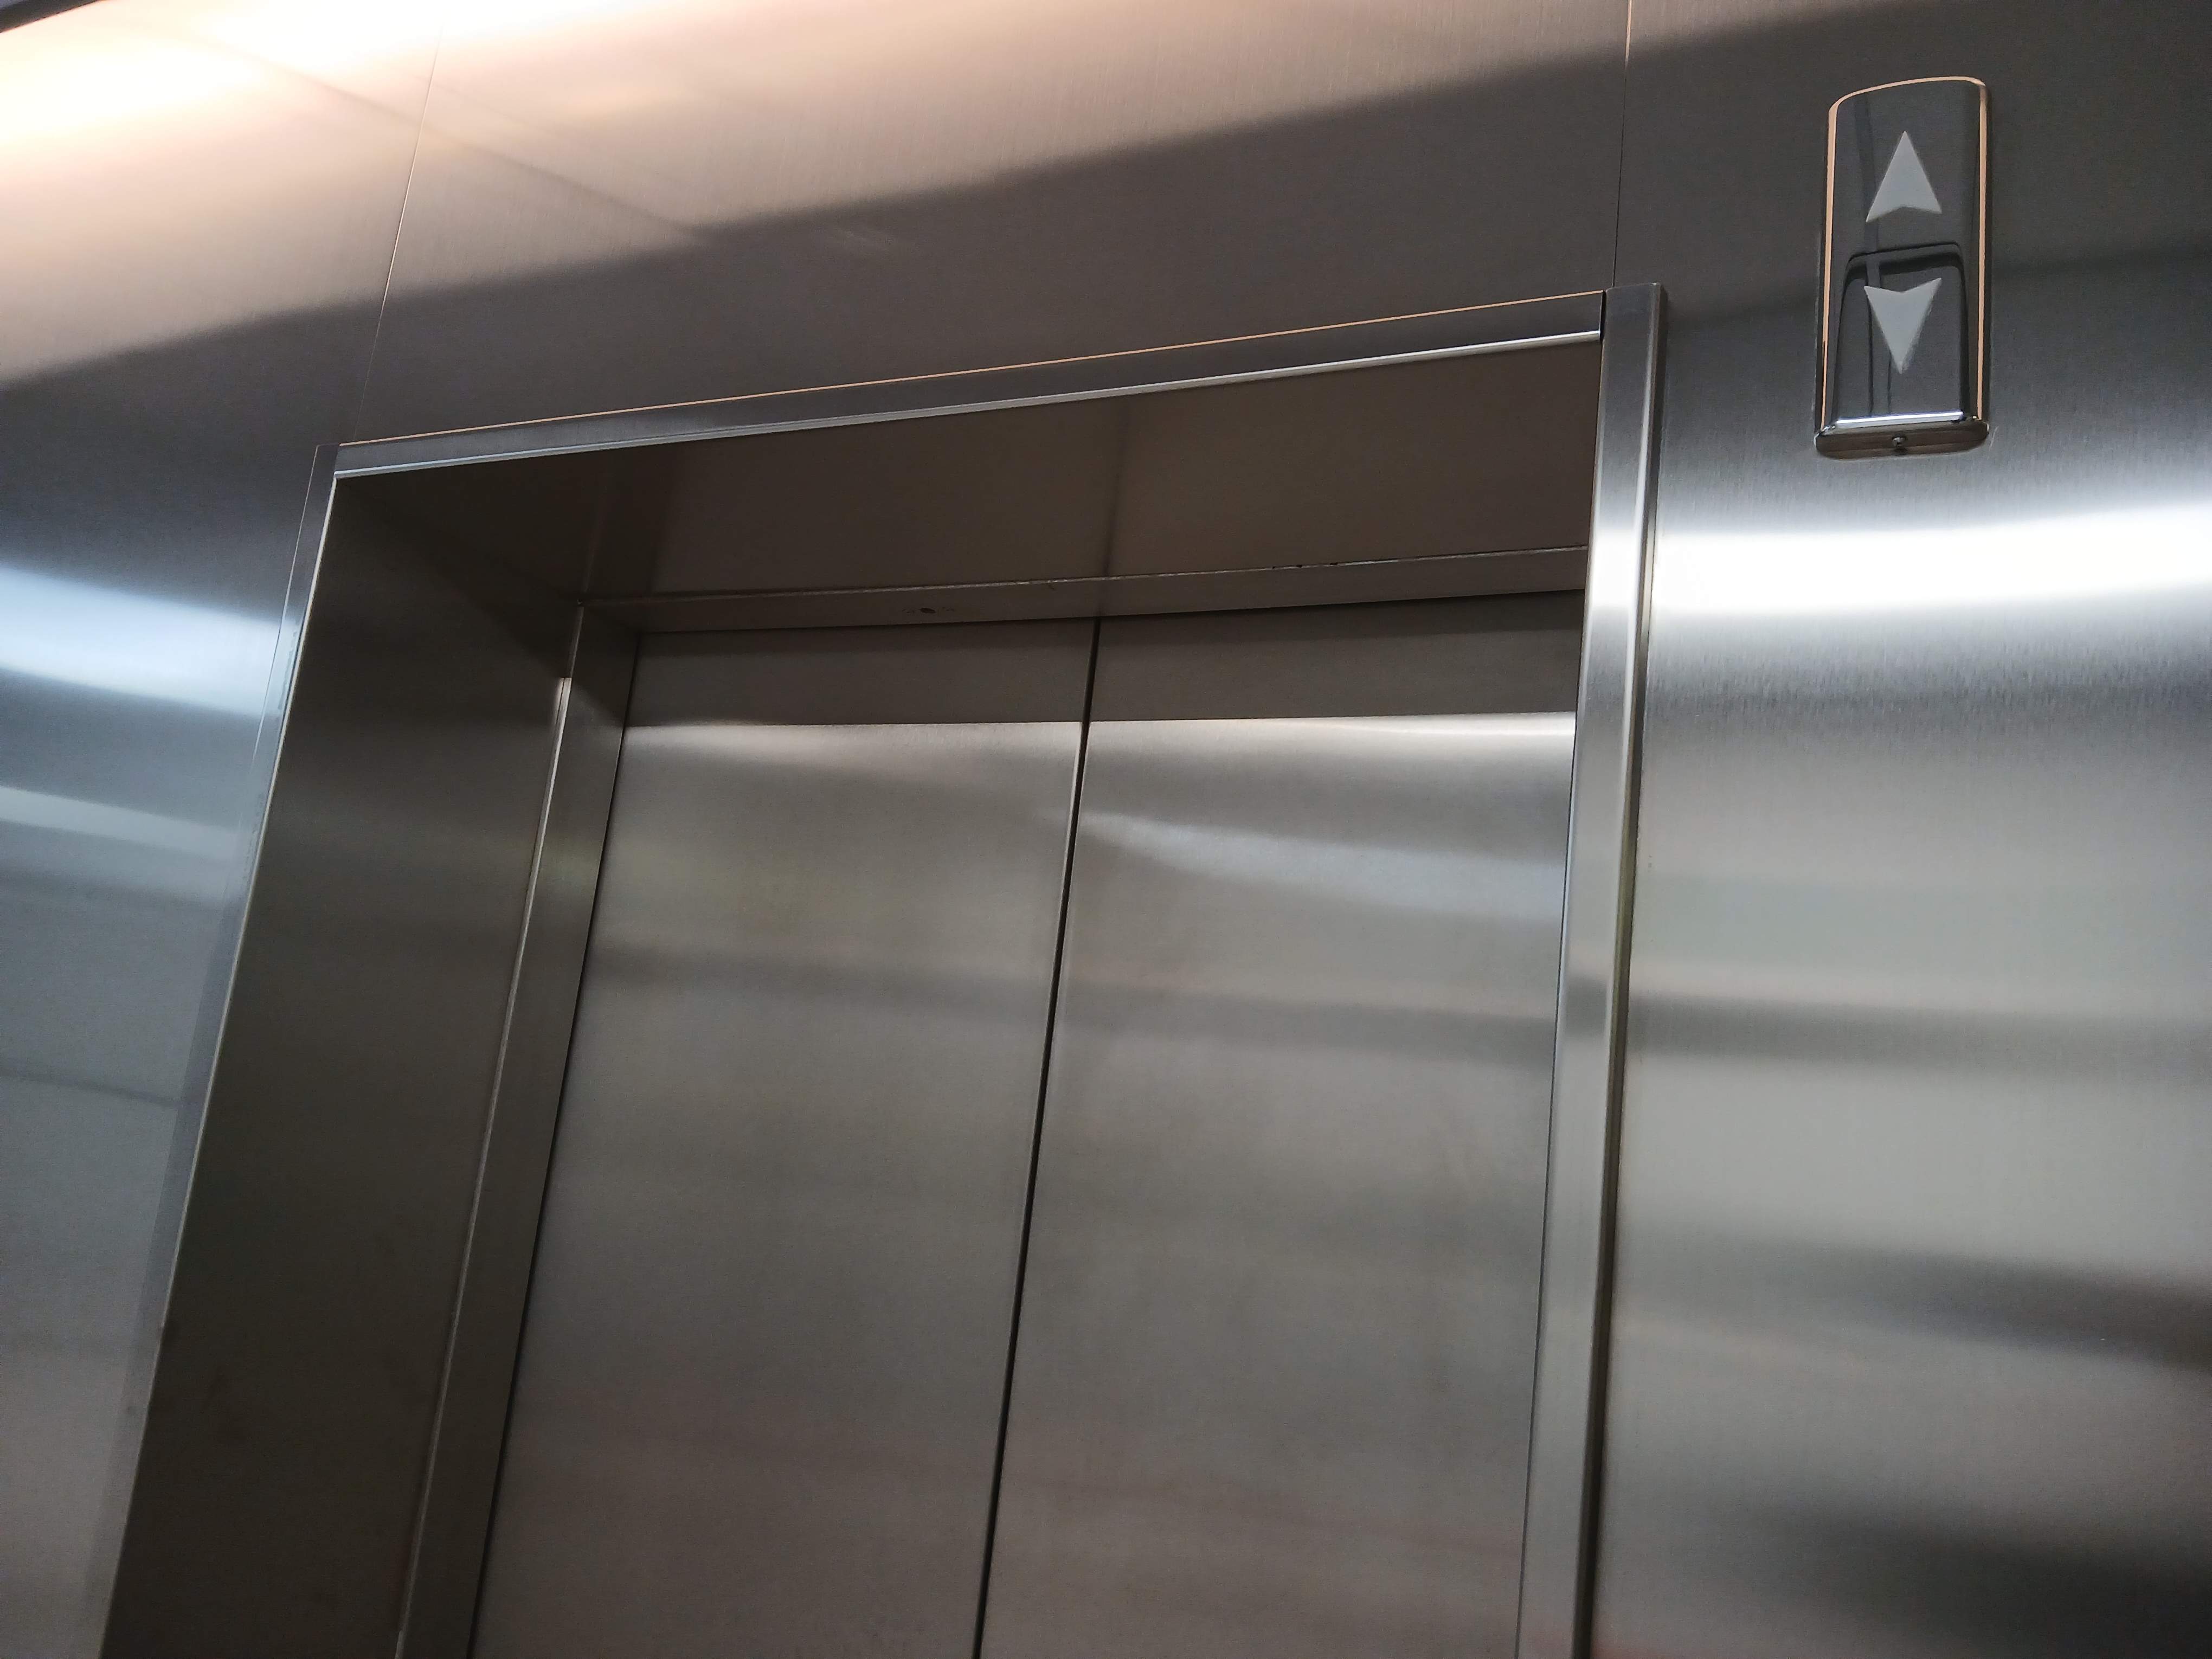 EuropaPress 5996721 ascensor